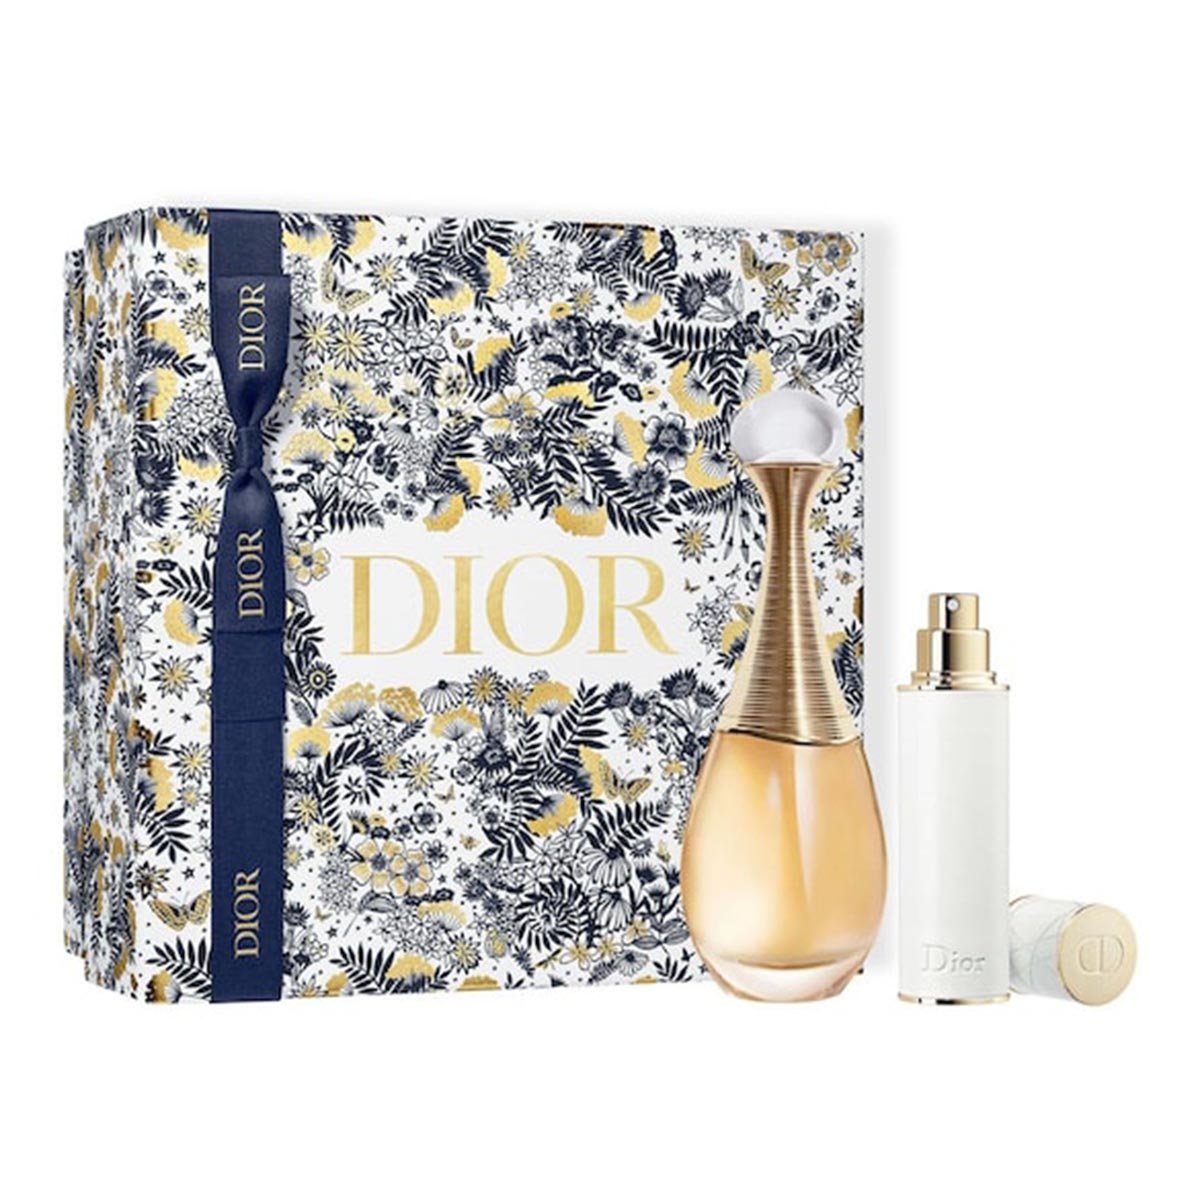 Dior J'adore EDP Travel Set | My Perfume Shop Australia